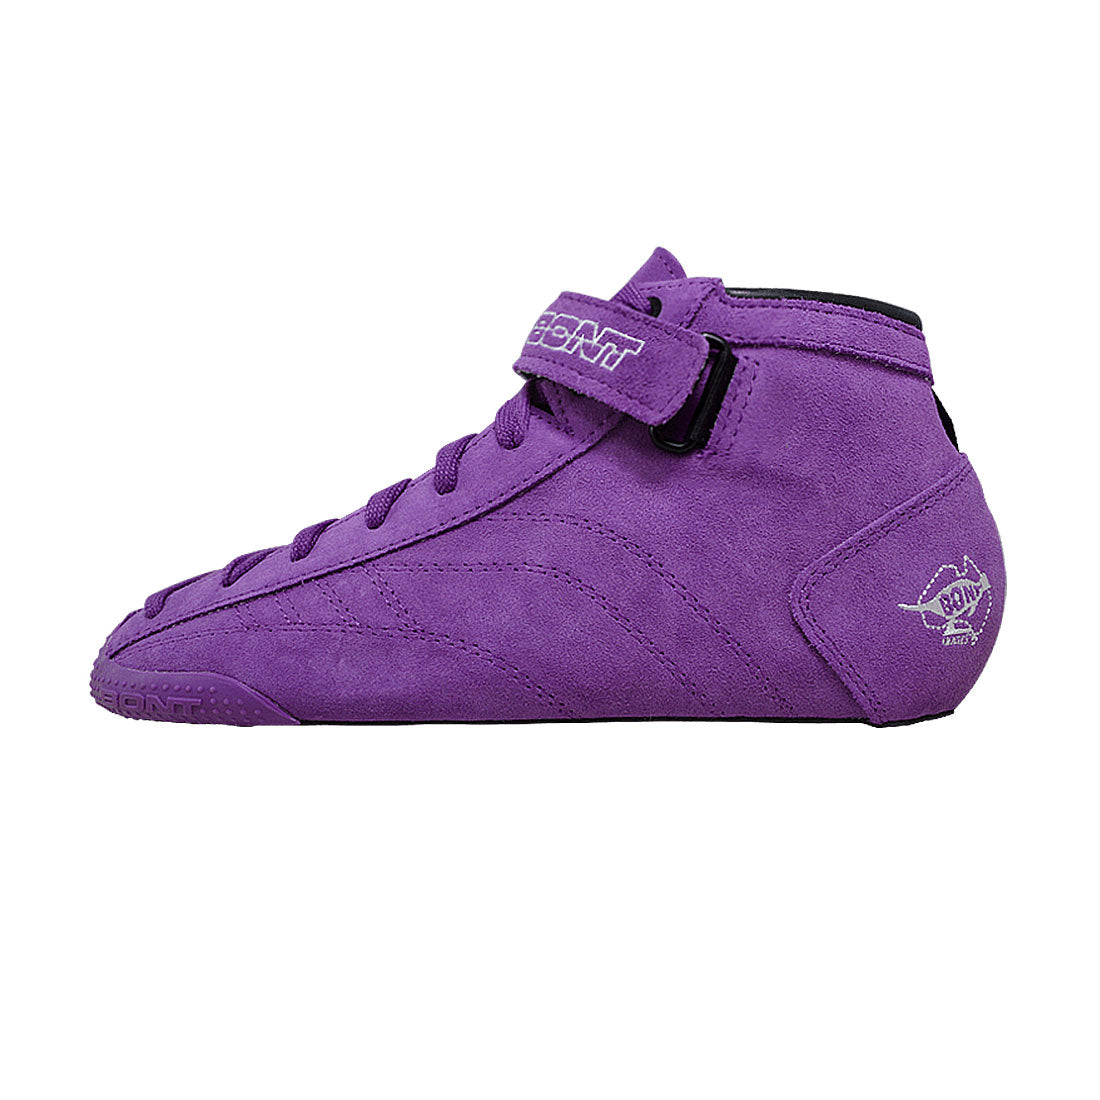 Bont Prostar Suede Boot - Purple Roller Skate Boots